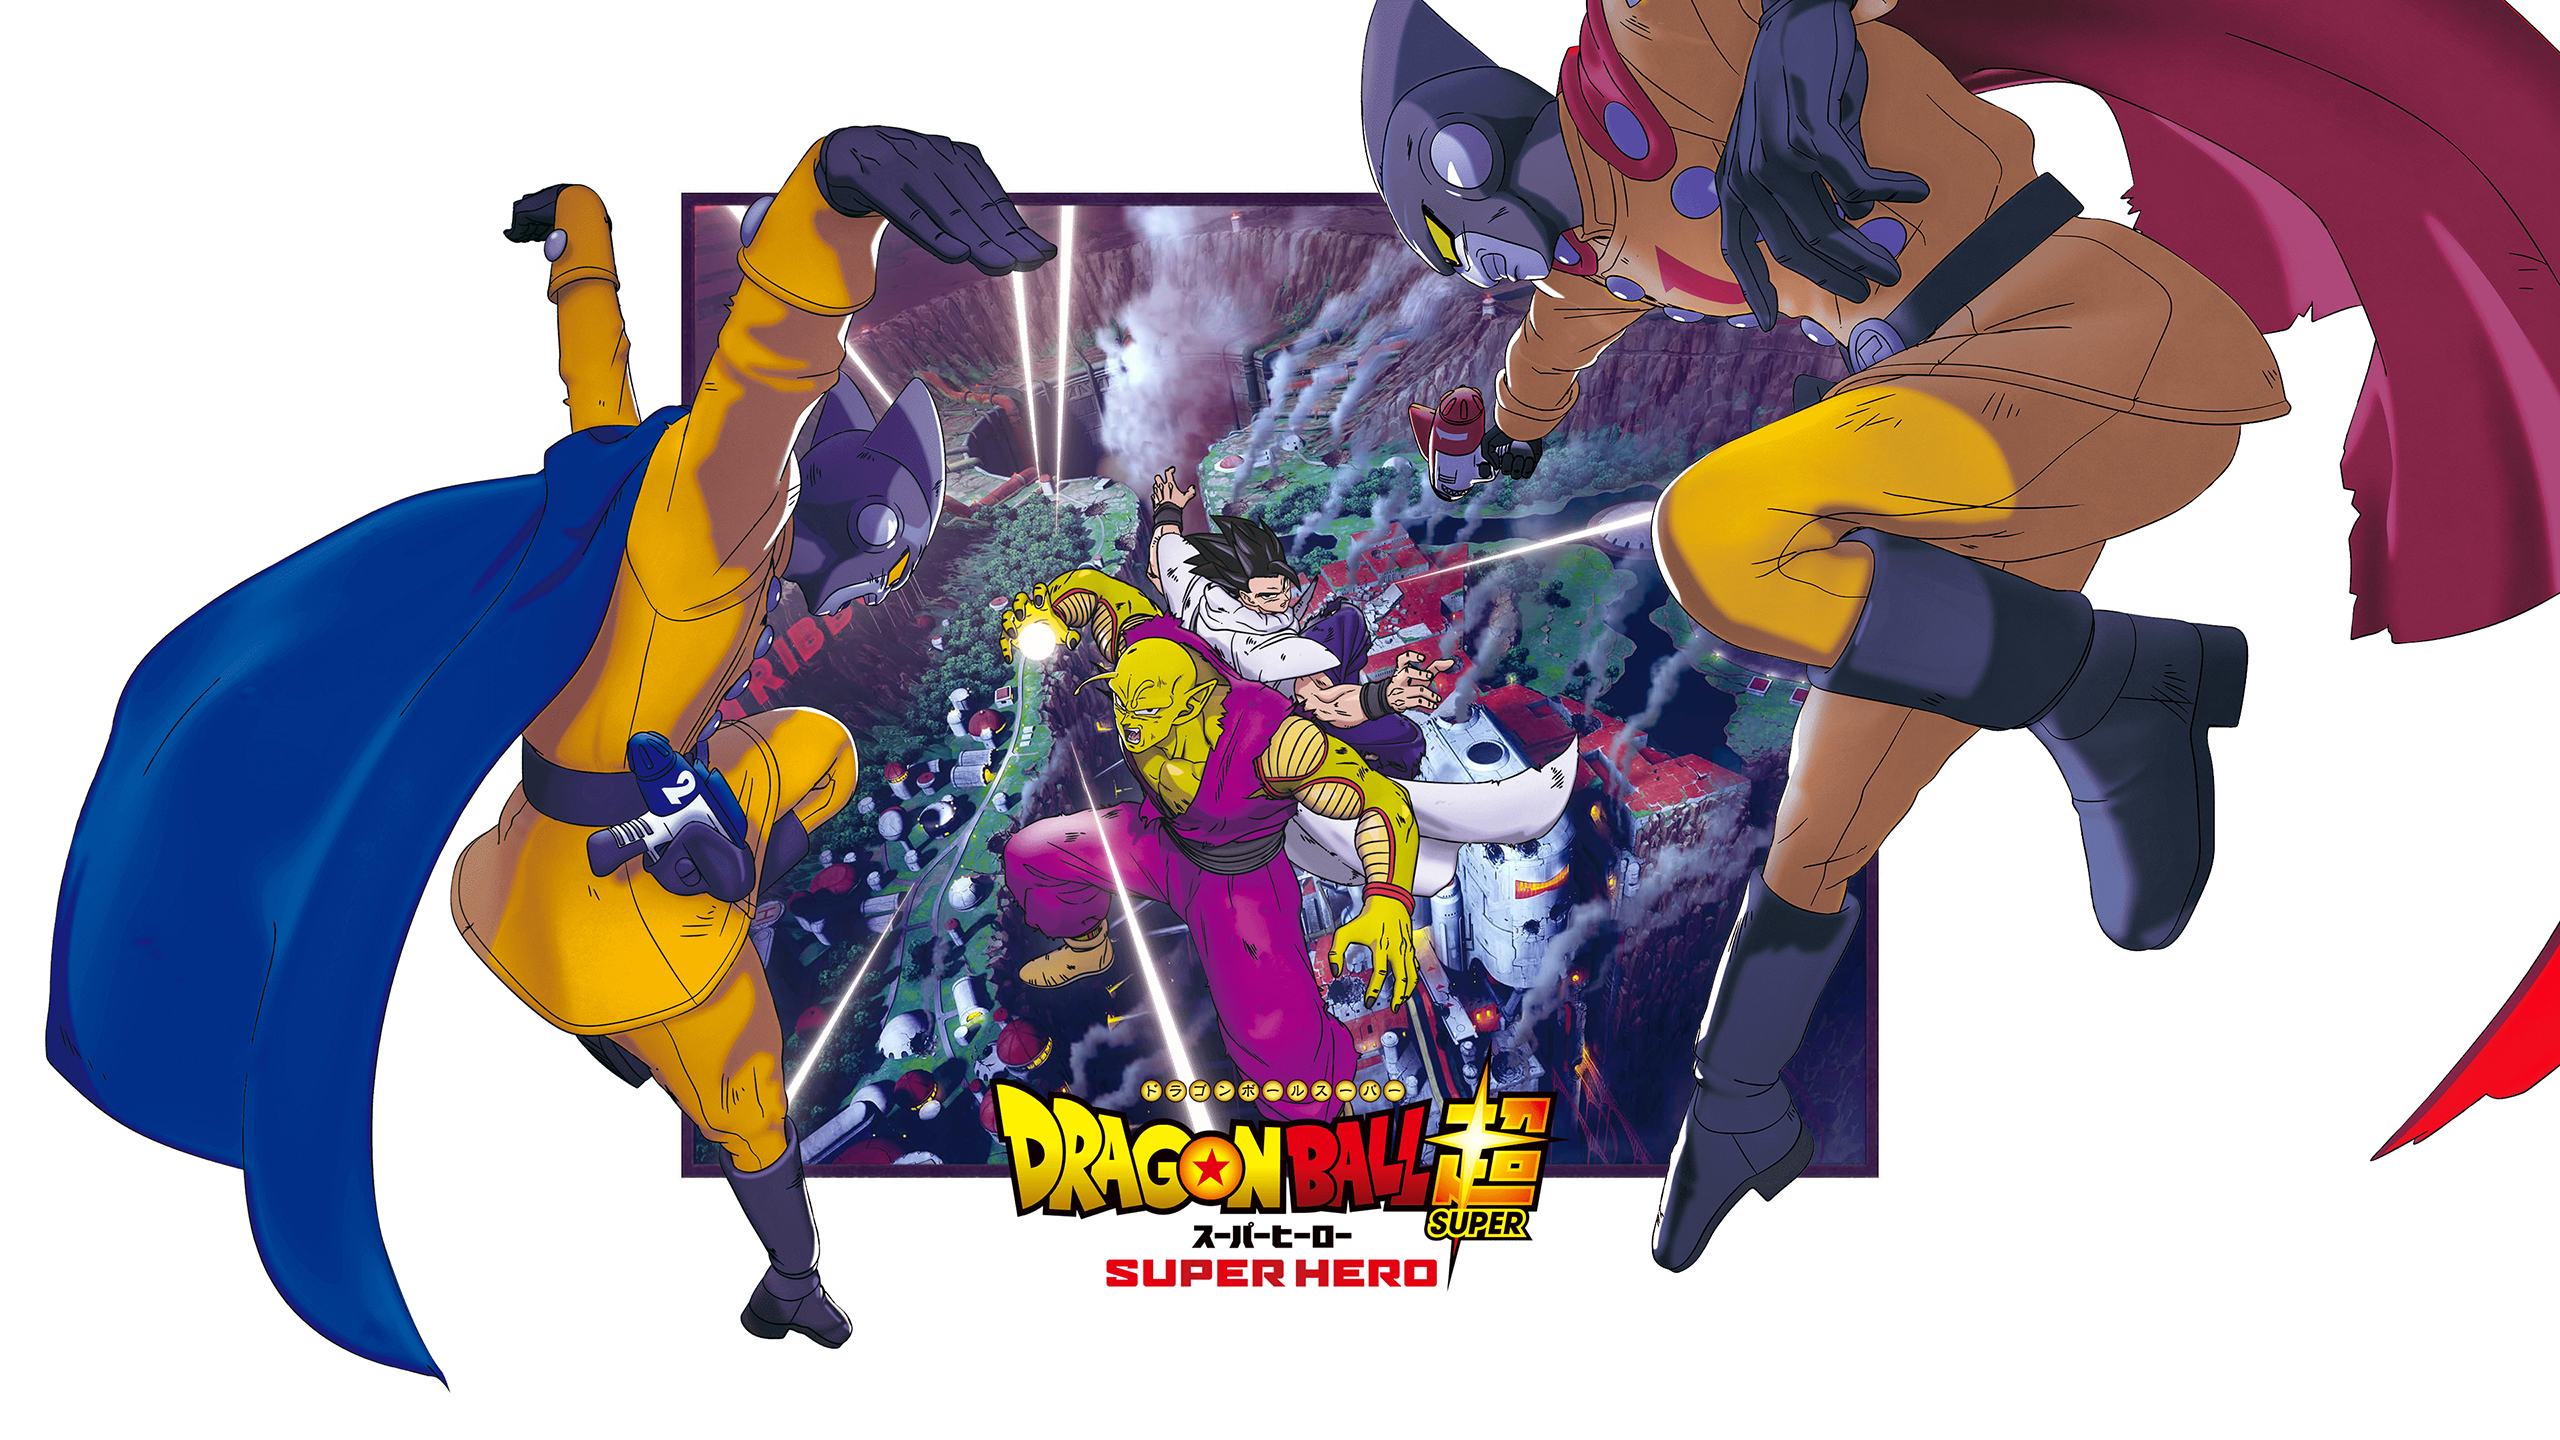 Dragon Ball Super: Super Hero' sets worldwide theatrical release